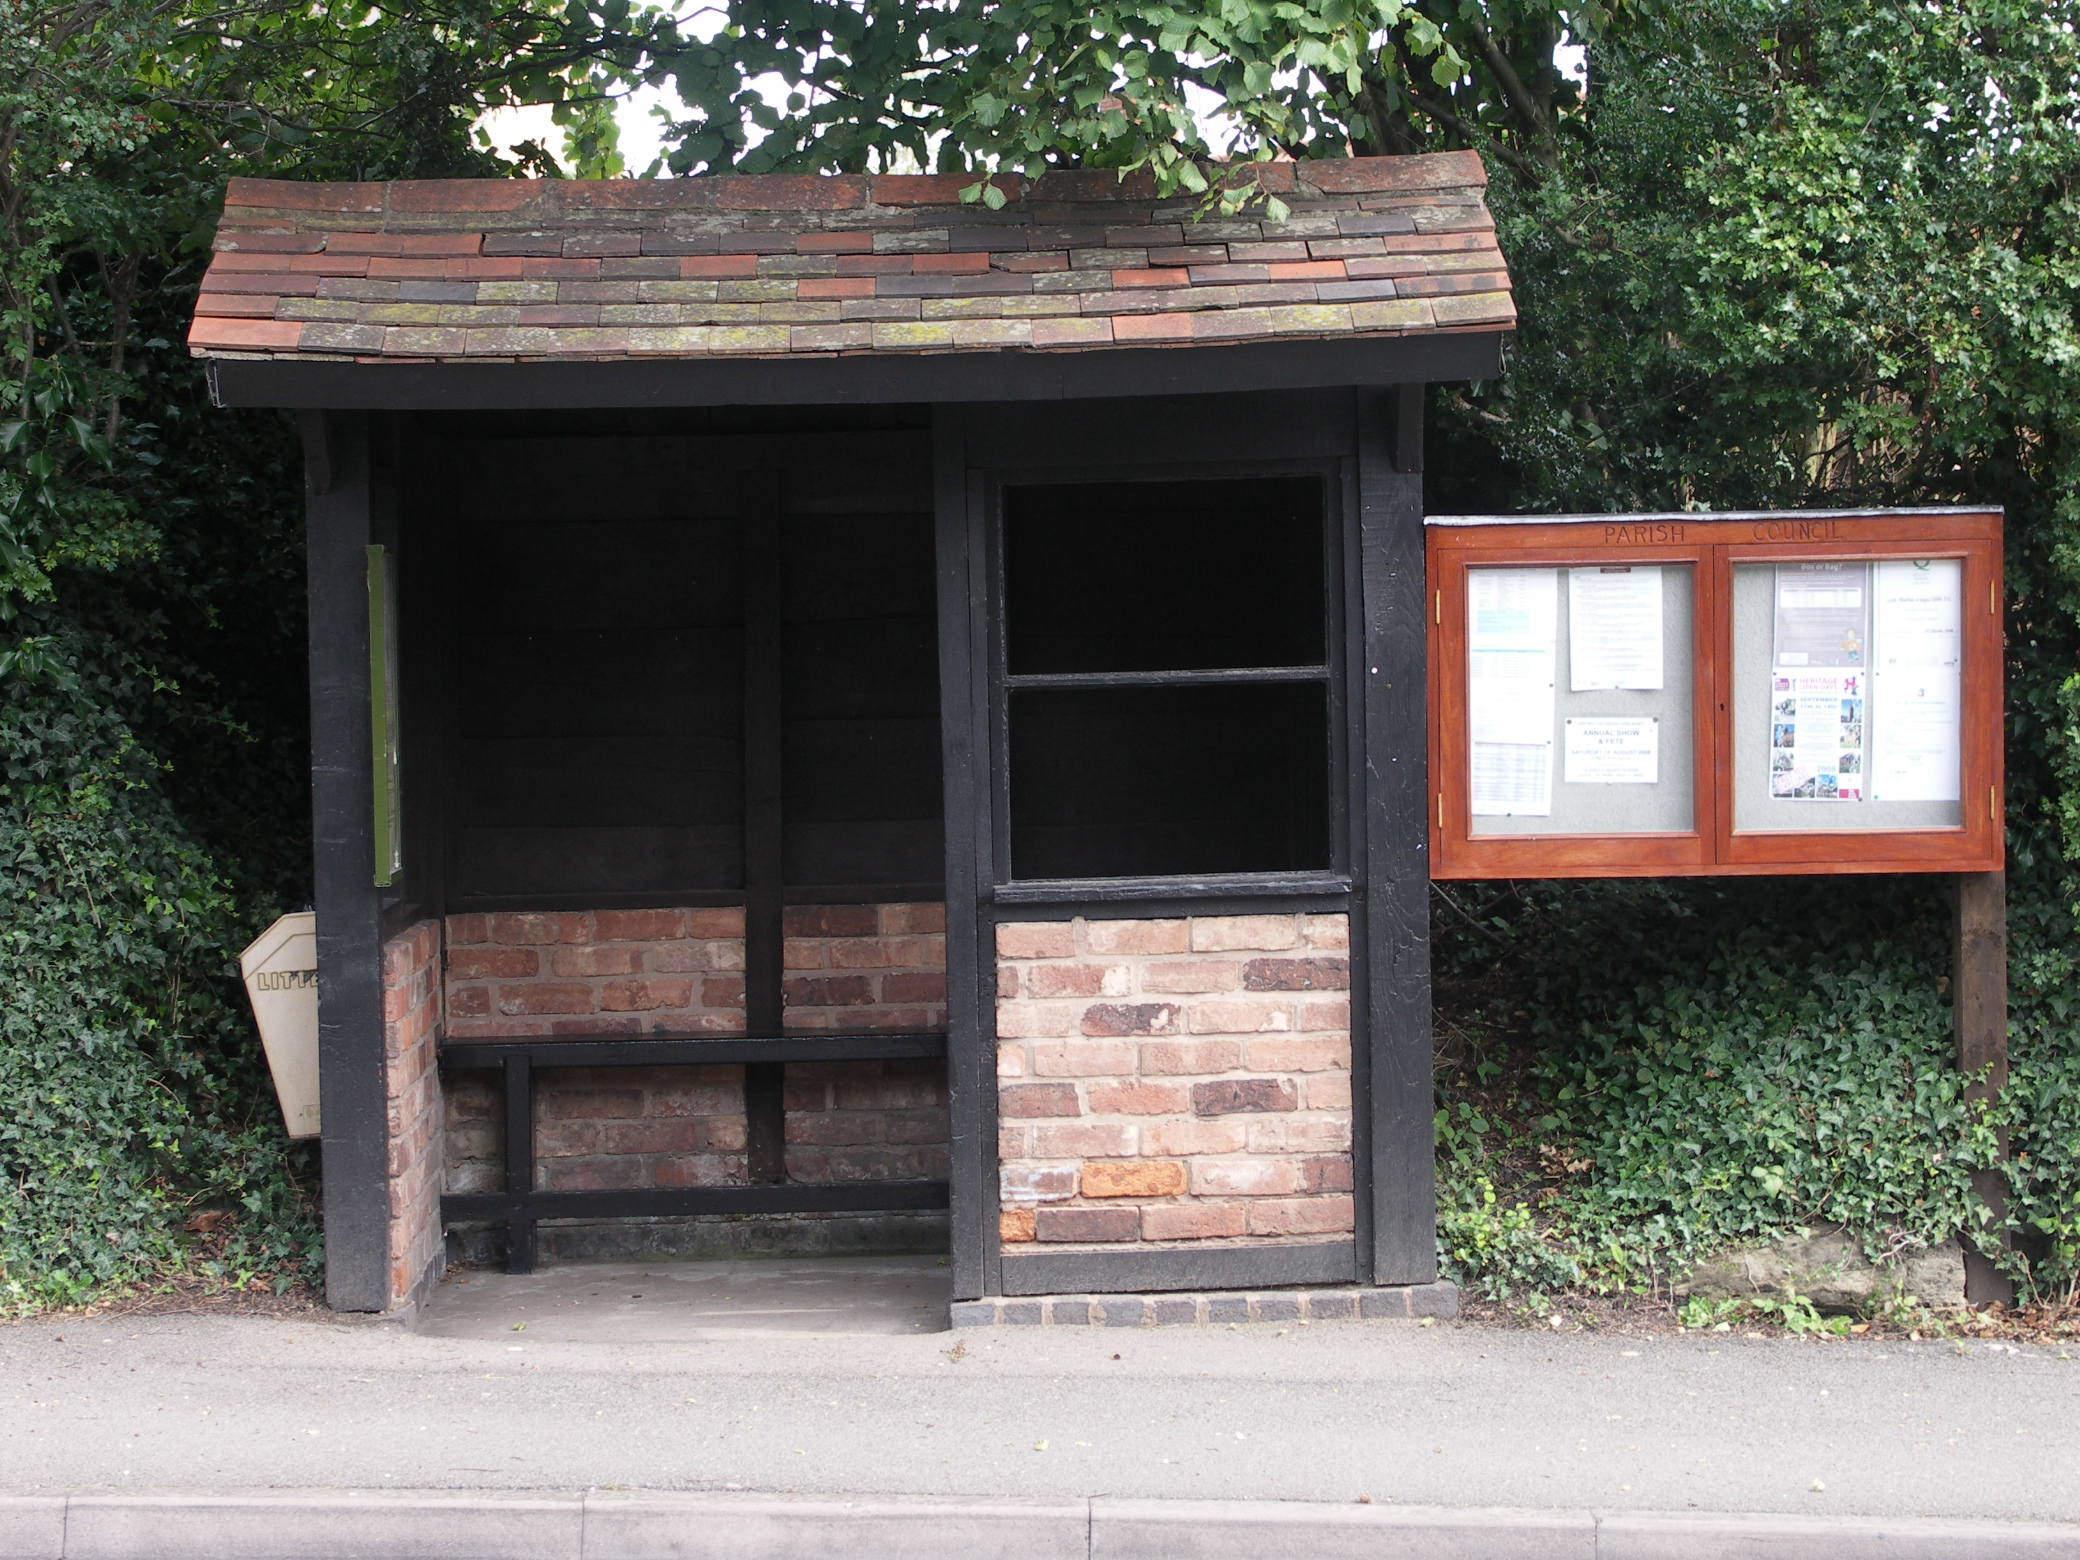 Bus shelter on Warwick Road (Warwick bound)